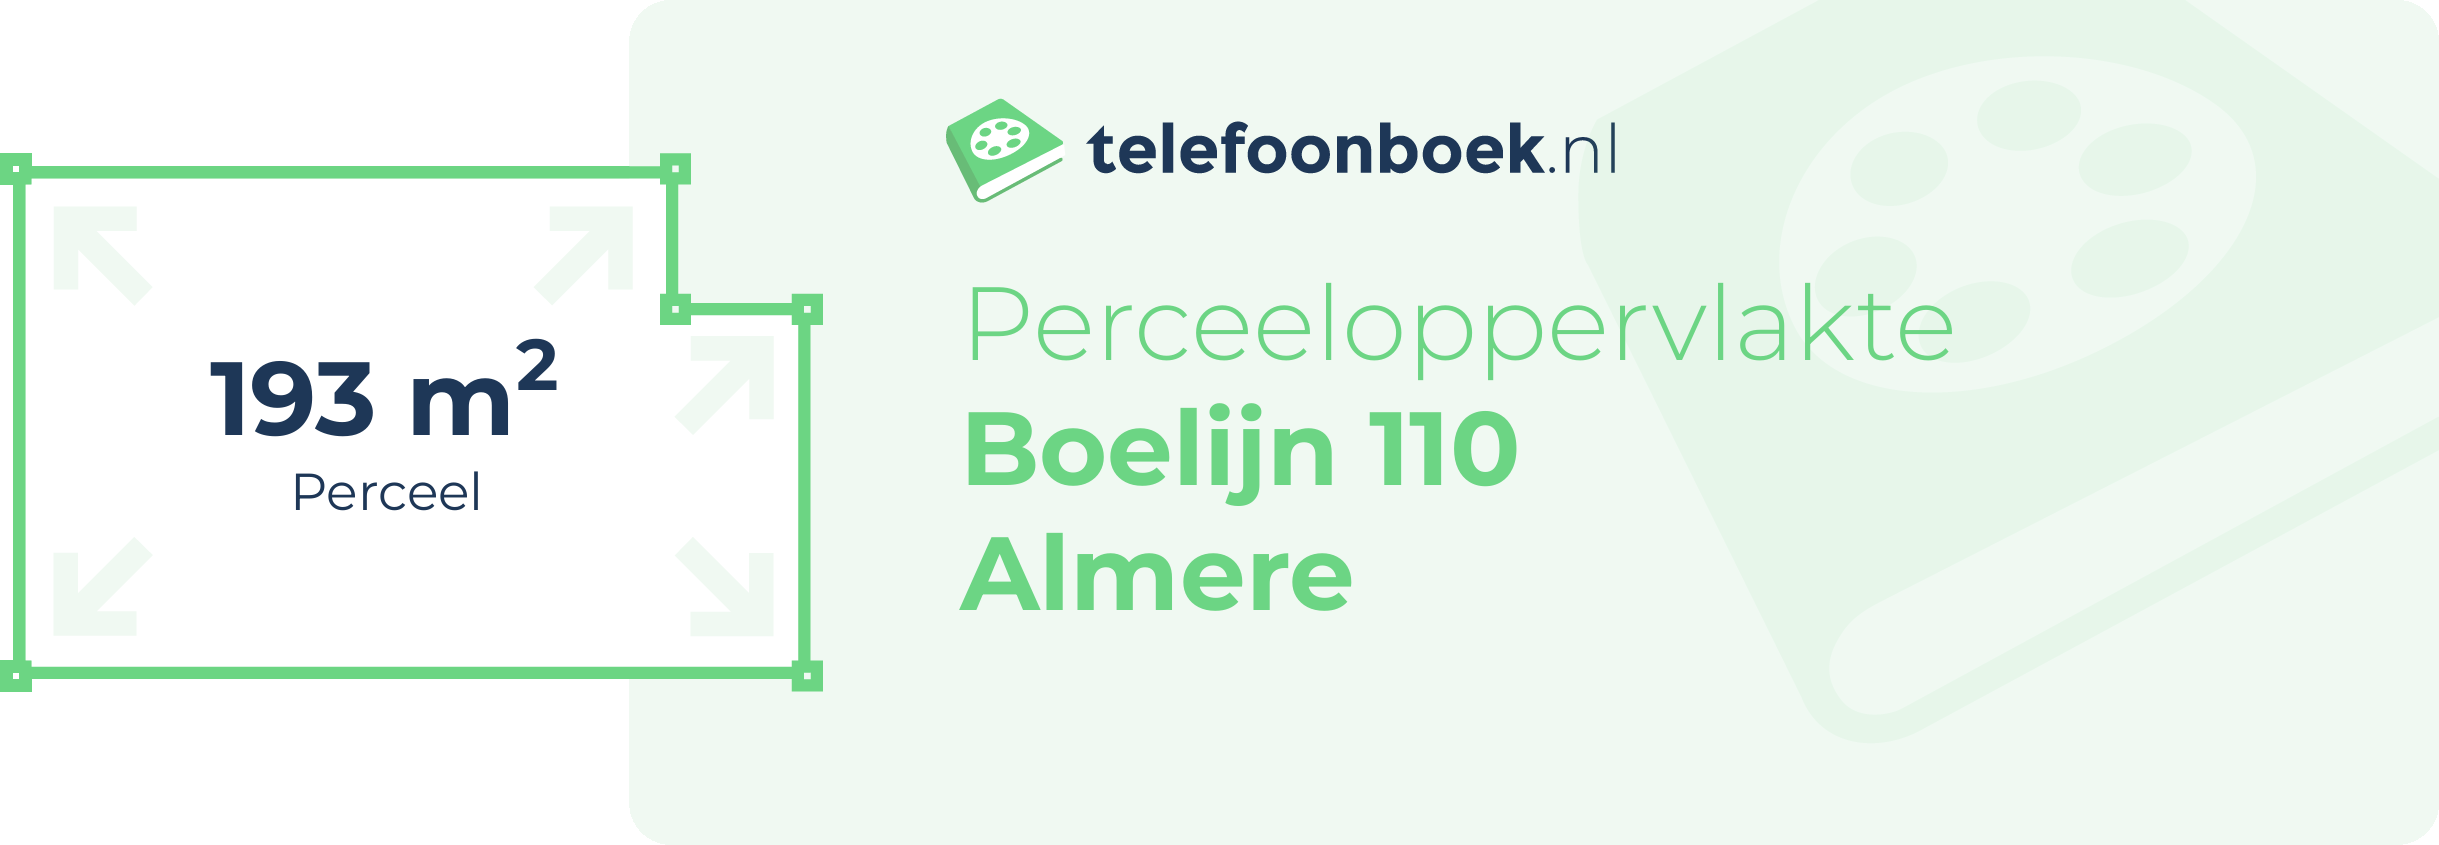 Perceeloppervlakte Boelijn 110 Almere